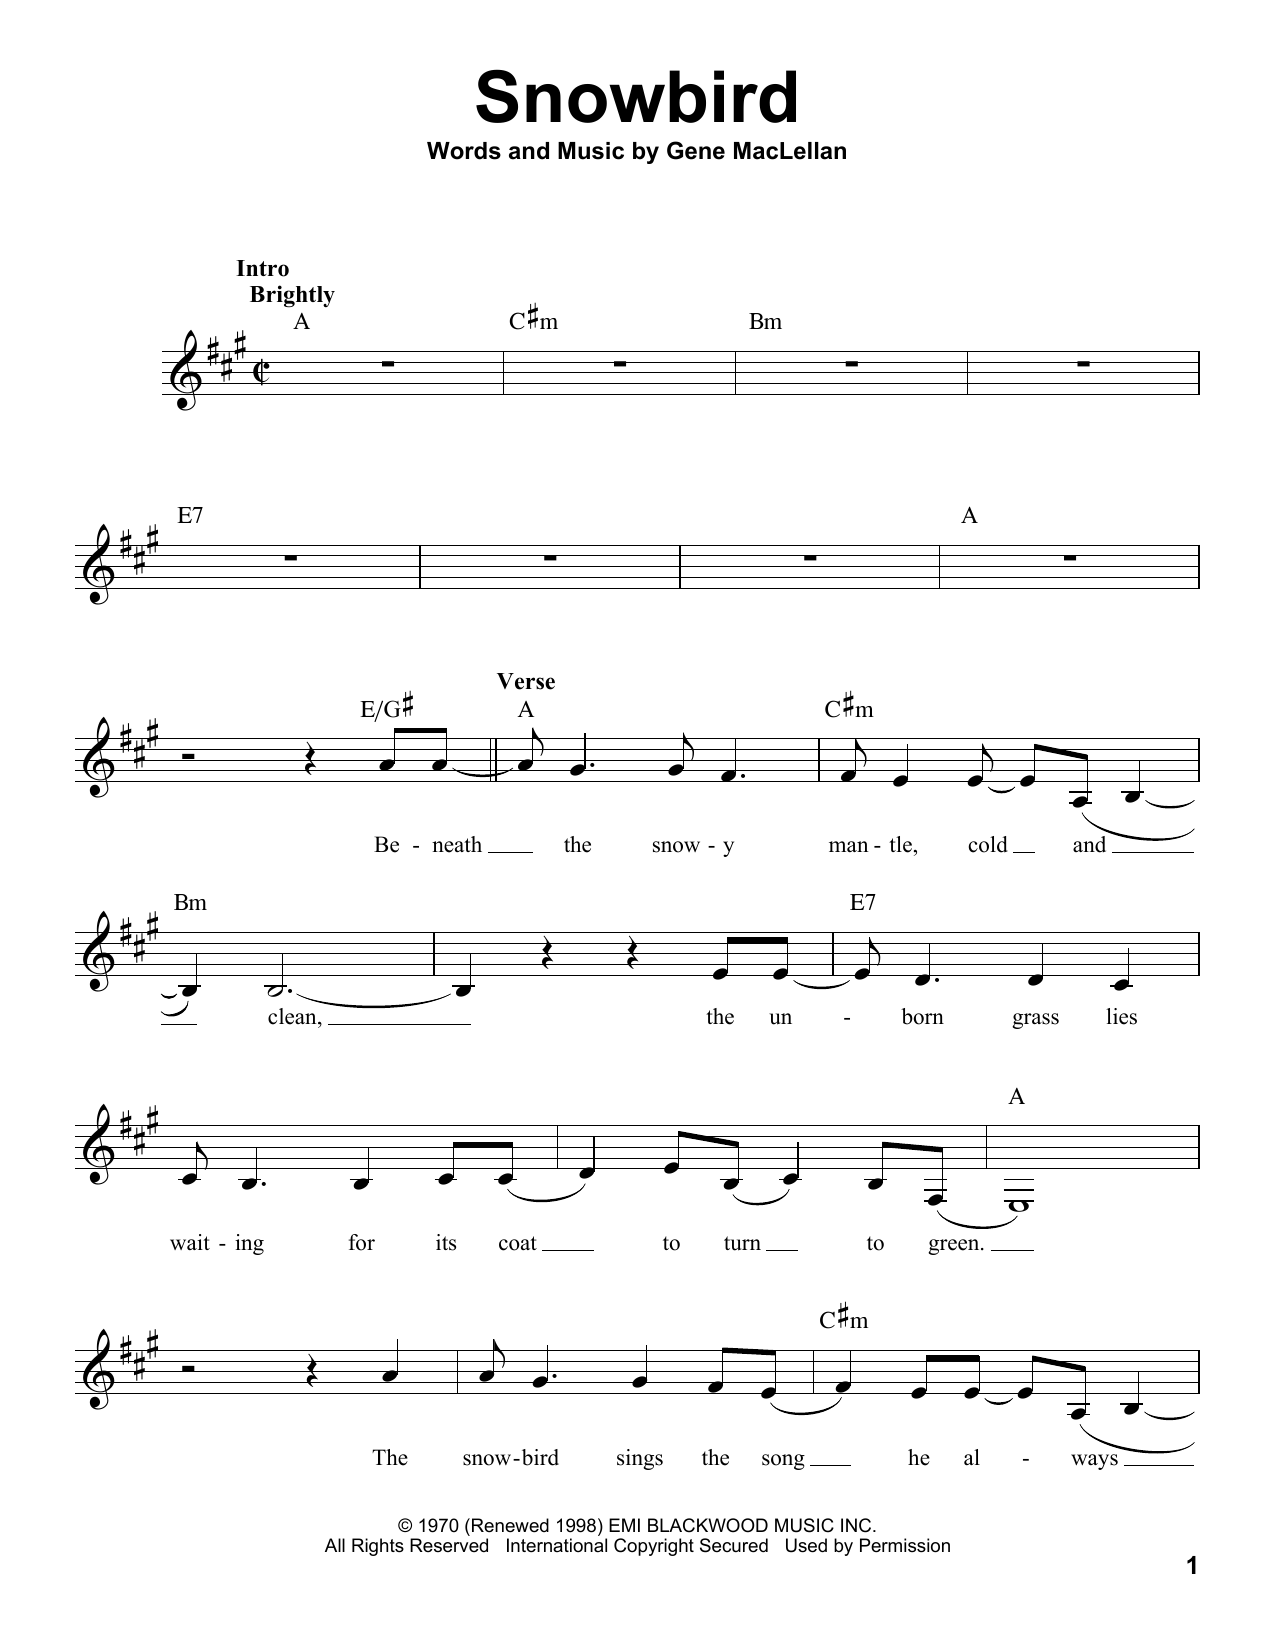 Gene MacLellan Snowbird Sheet Music Notes & Chords for Voice - Download or Print PDF